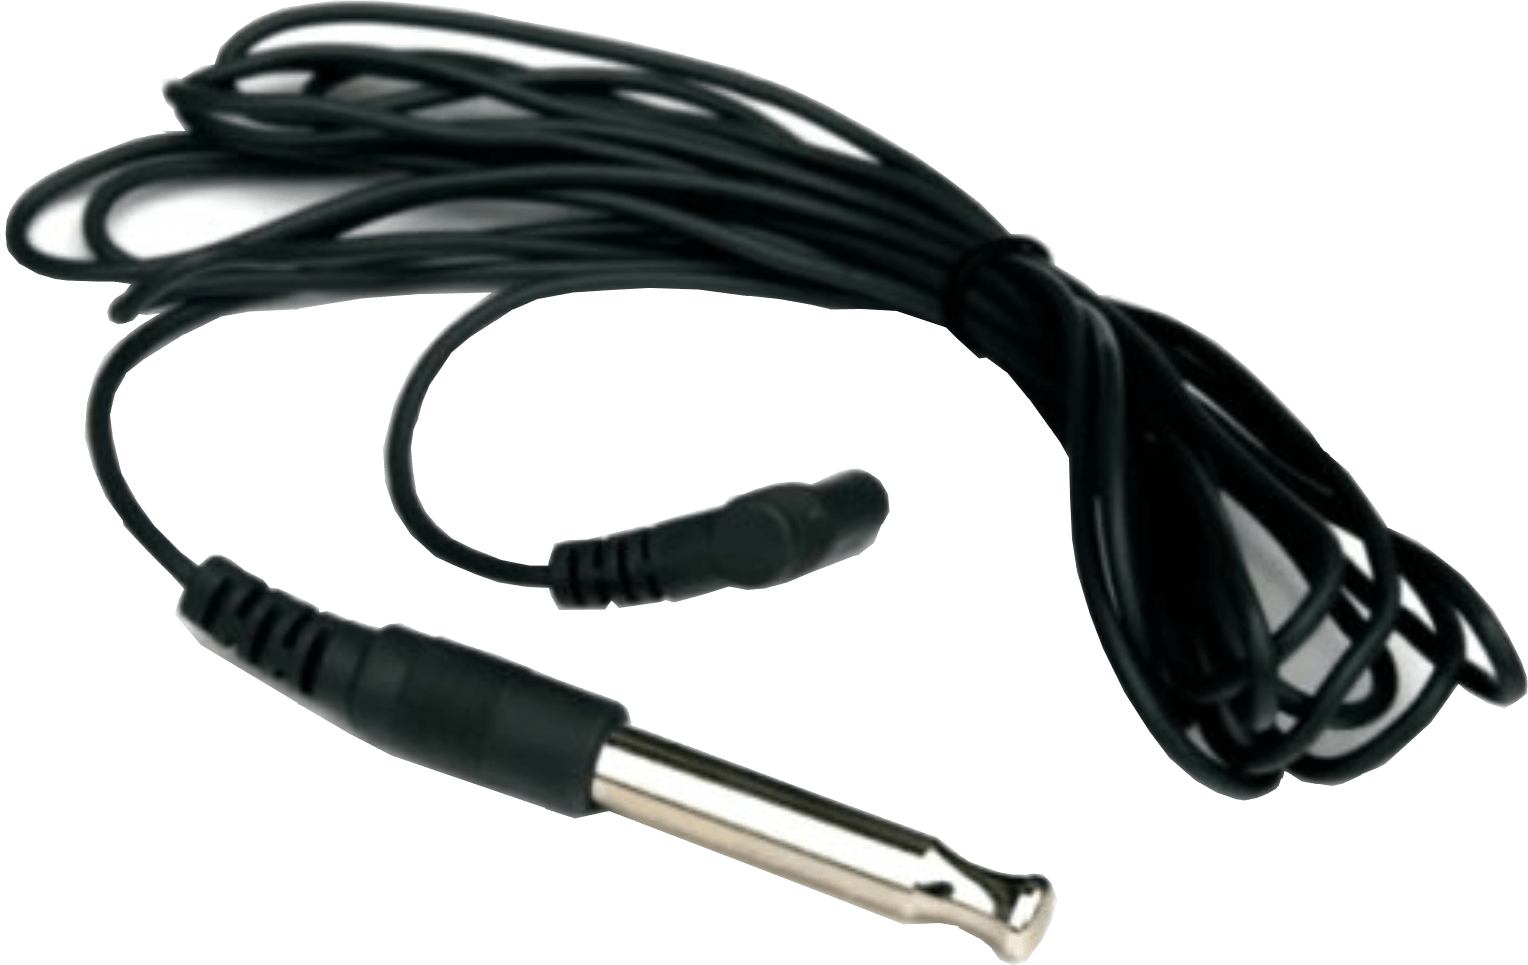 Locamed single-use monopolar cable